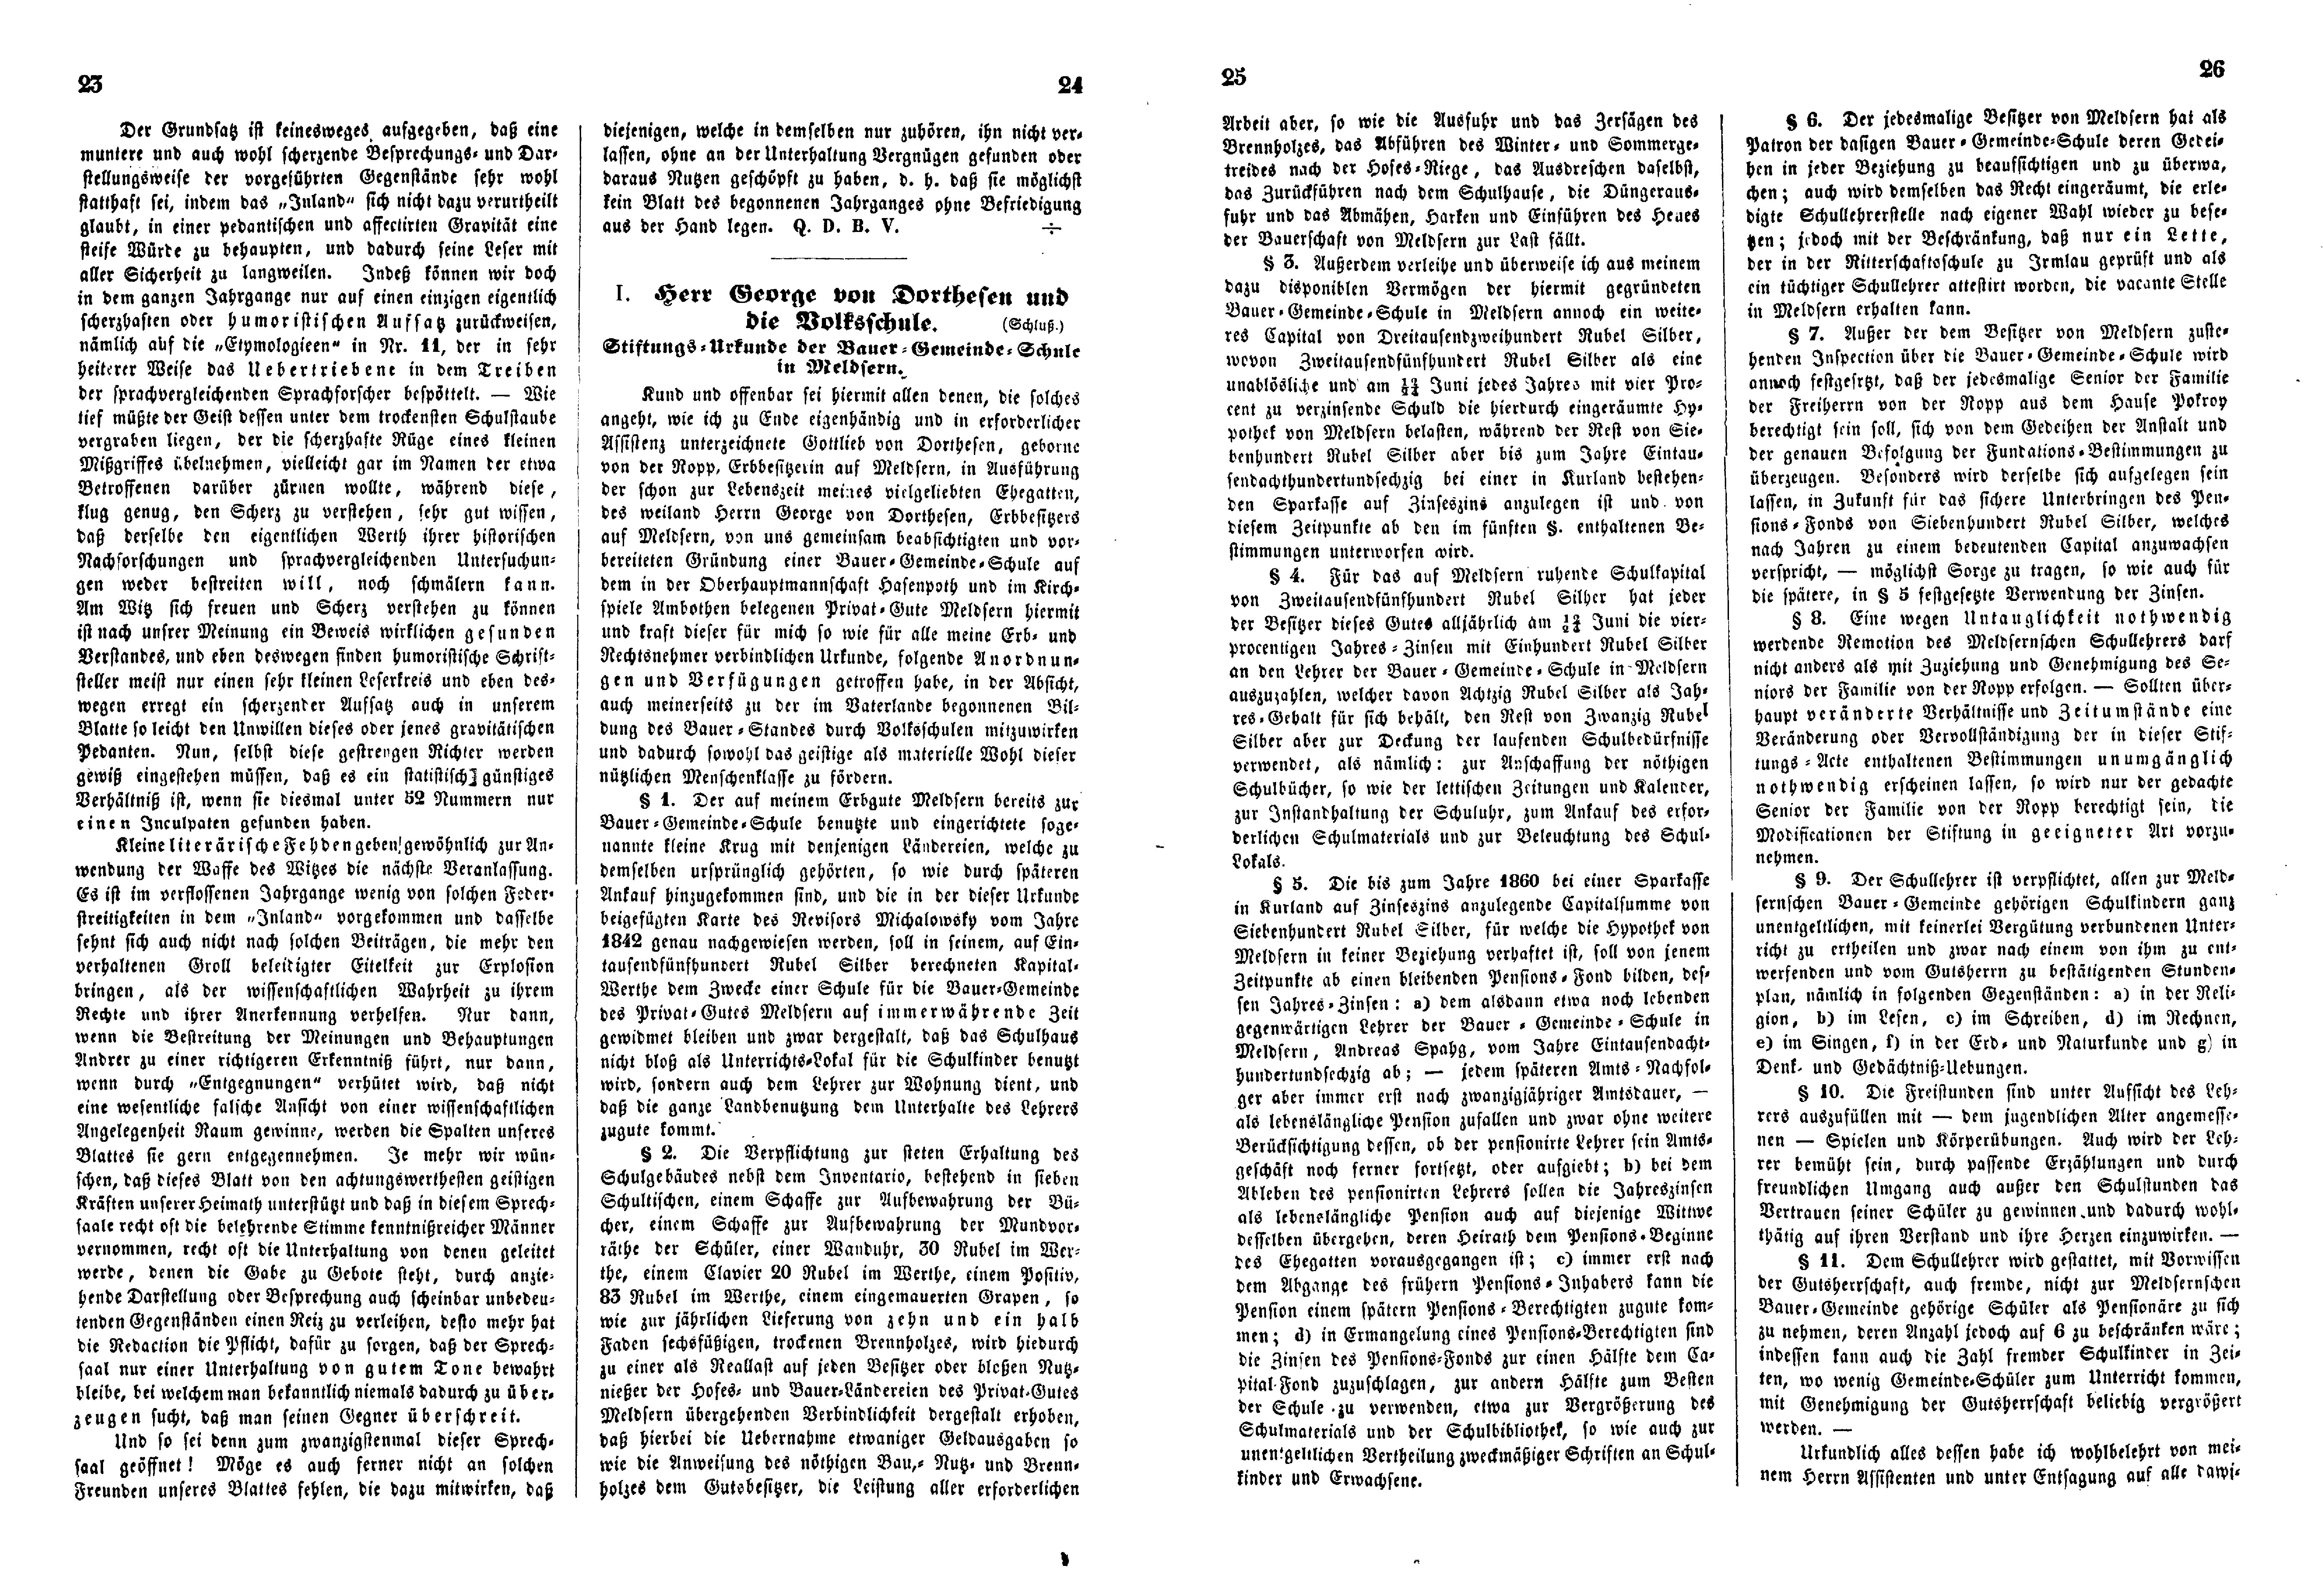 Das Inland [20] (1855) | 14. (23-26) Main body of text